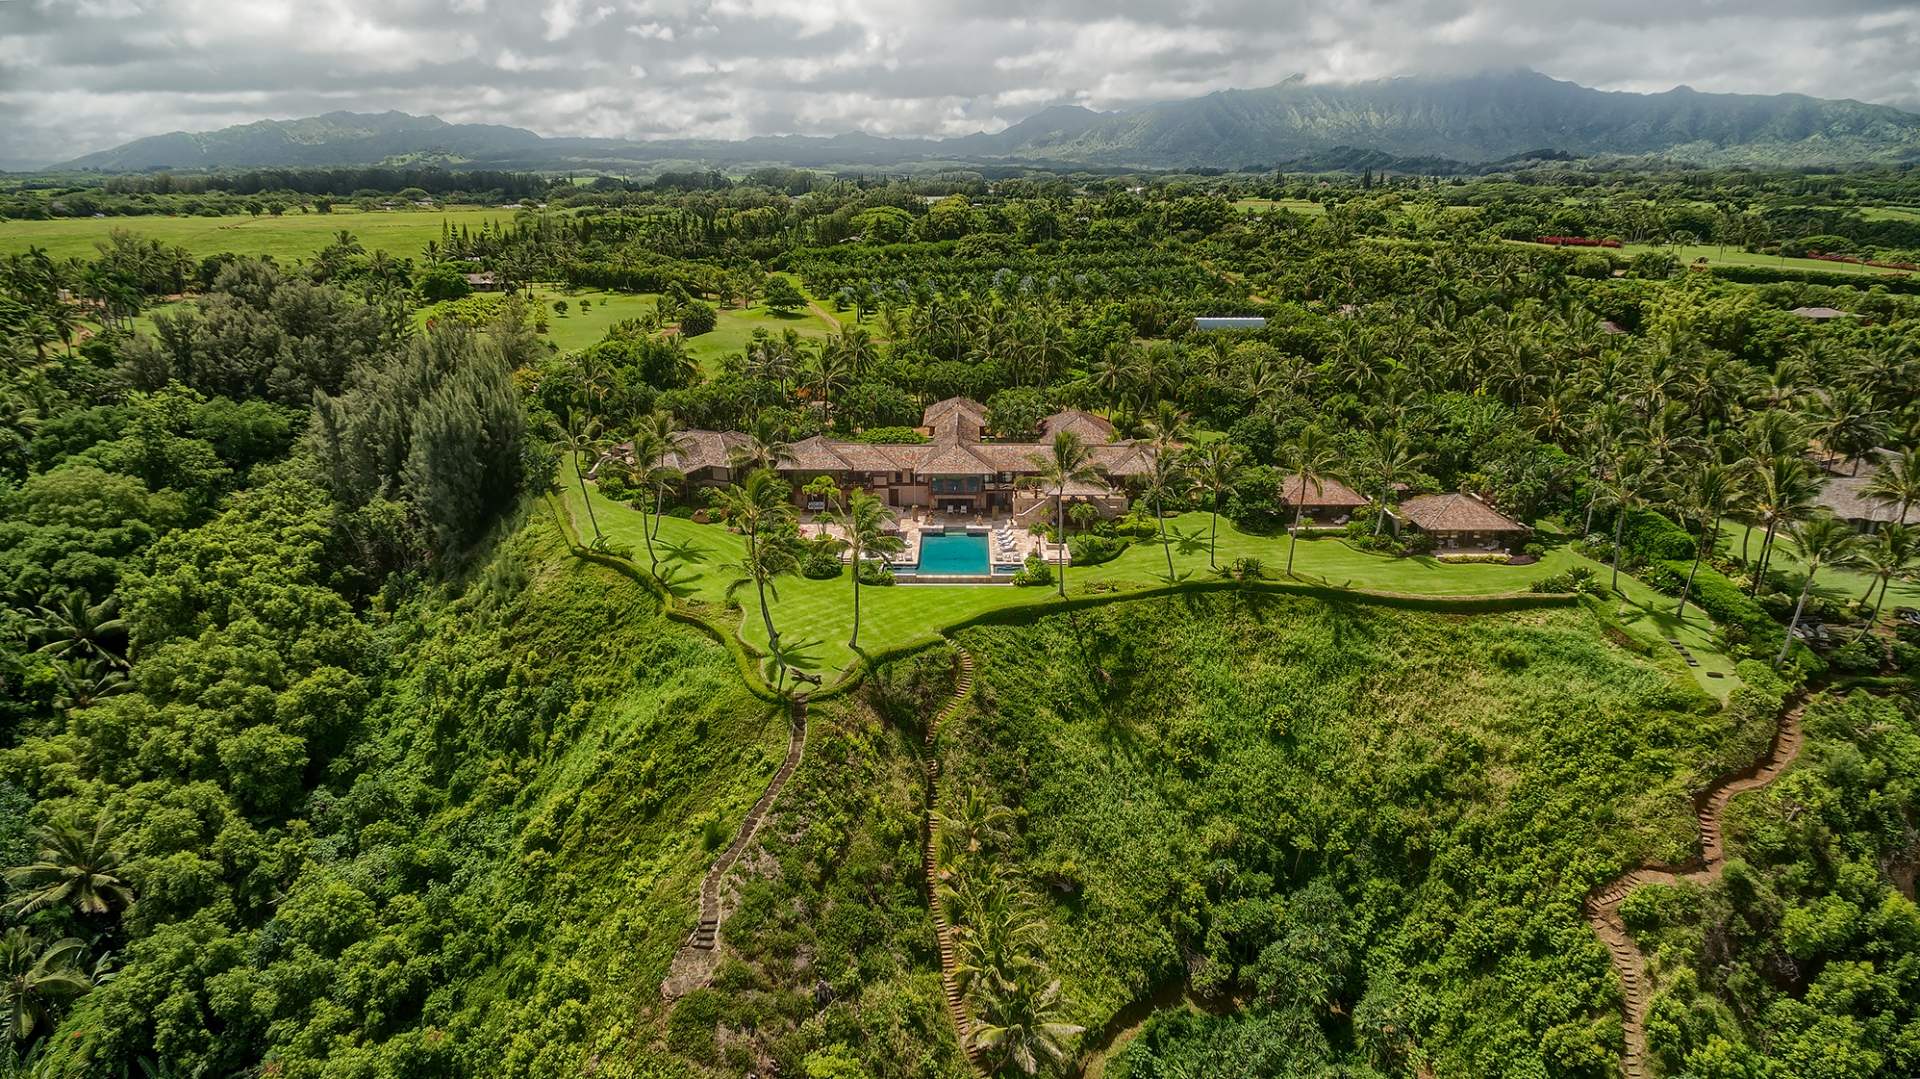 Série Aluga-se um Paraíso: 3 hospedagens incríveis no Havaí